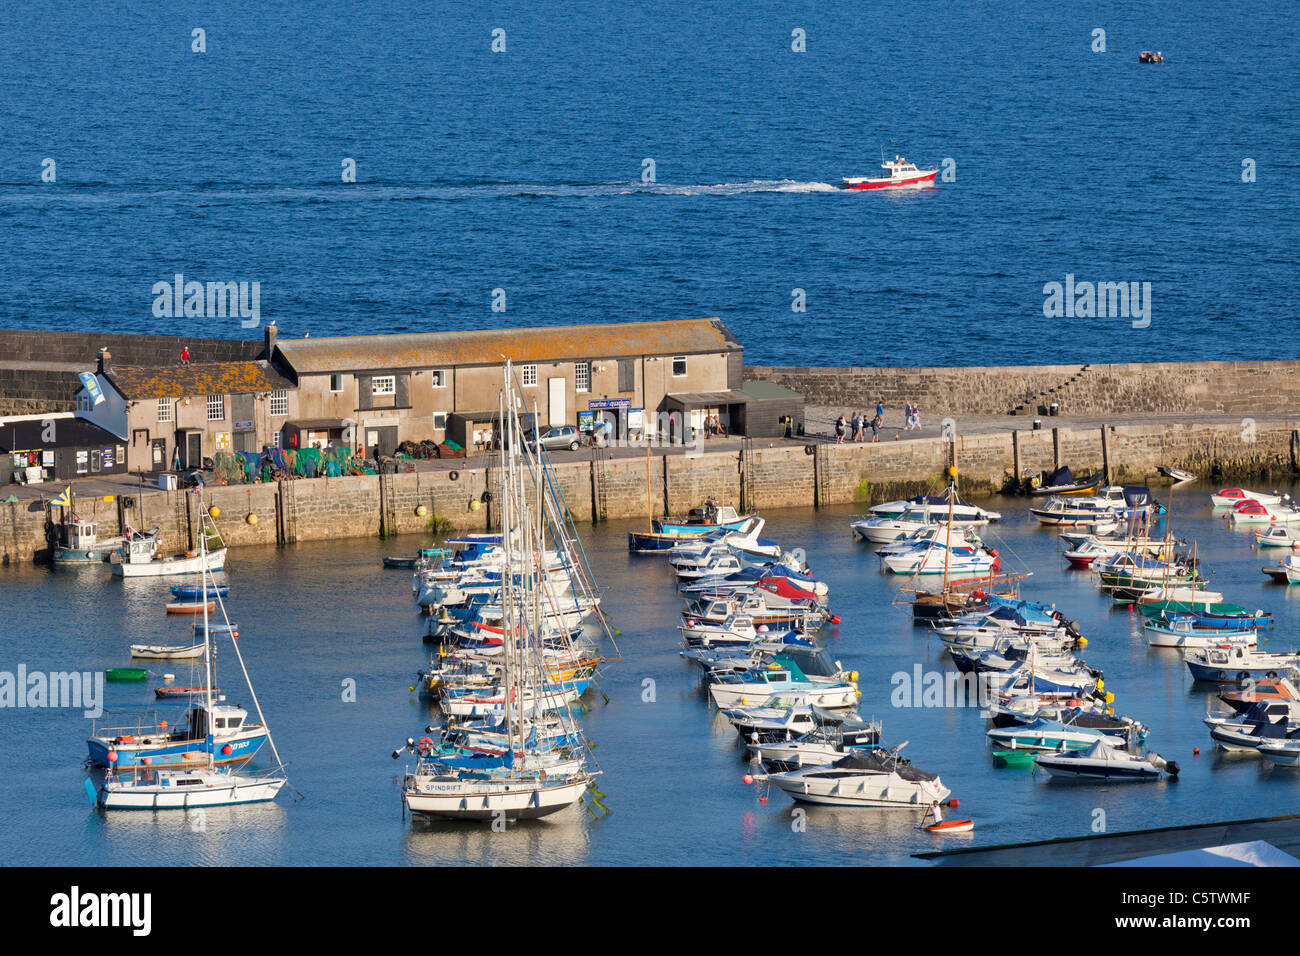 Many fishing boats in Lyme Regis harbour Dorset England UK GB EU Europe Stock Photo